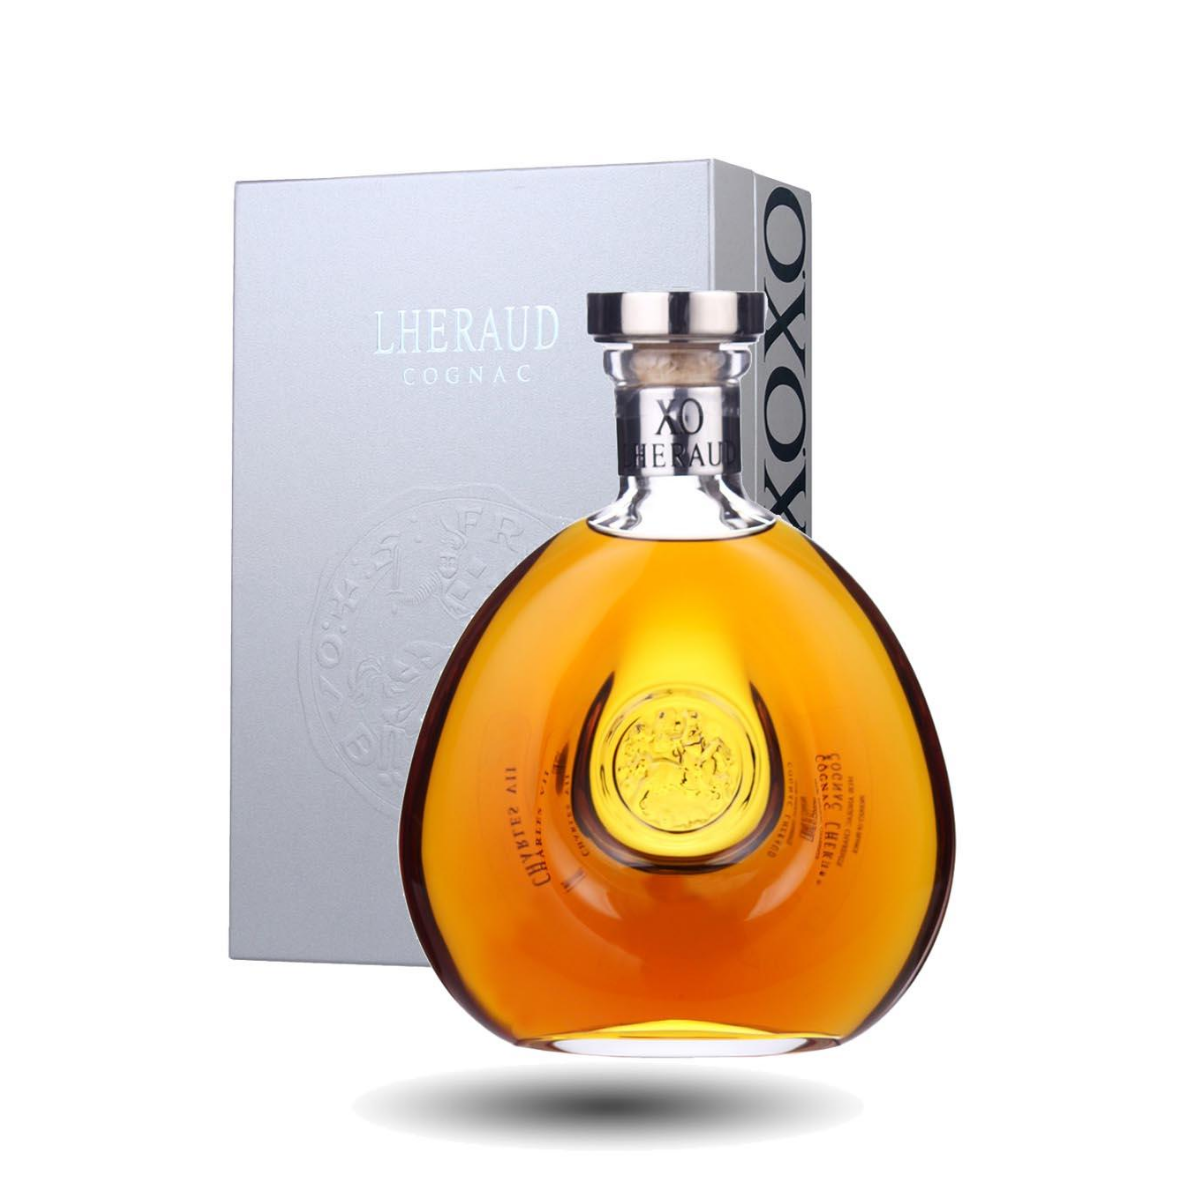 Lheraud cognac цена. Lheraud Cognac XO. Lheraud XO 0.7. Cognac Lheraud XO Charles VII. Lheraud Cognac 48 XO.